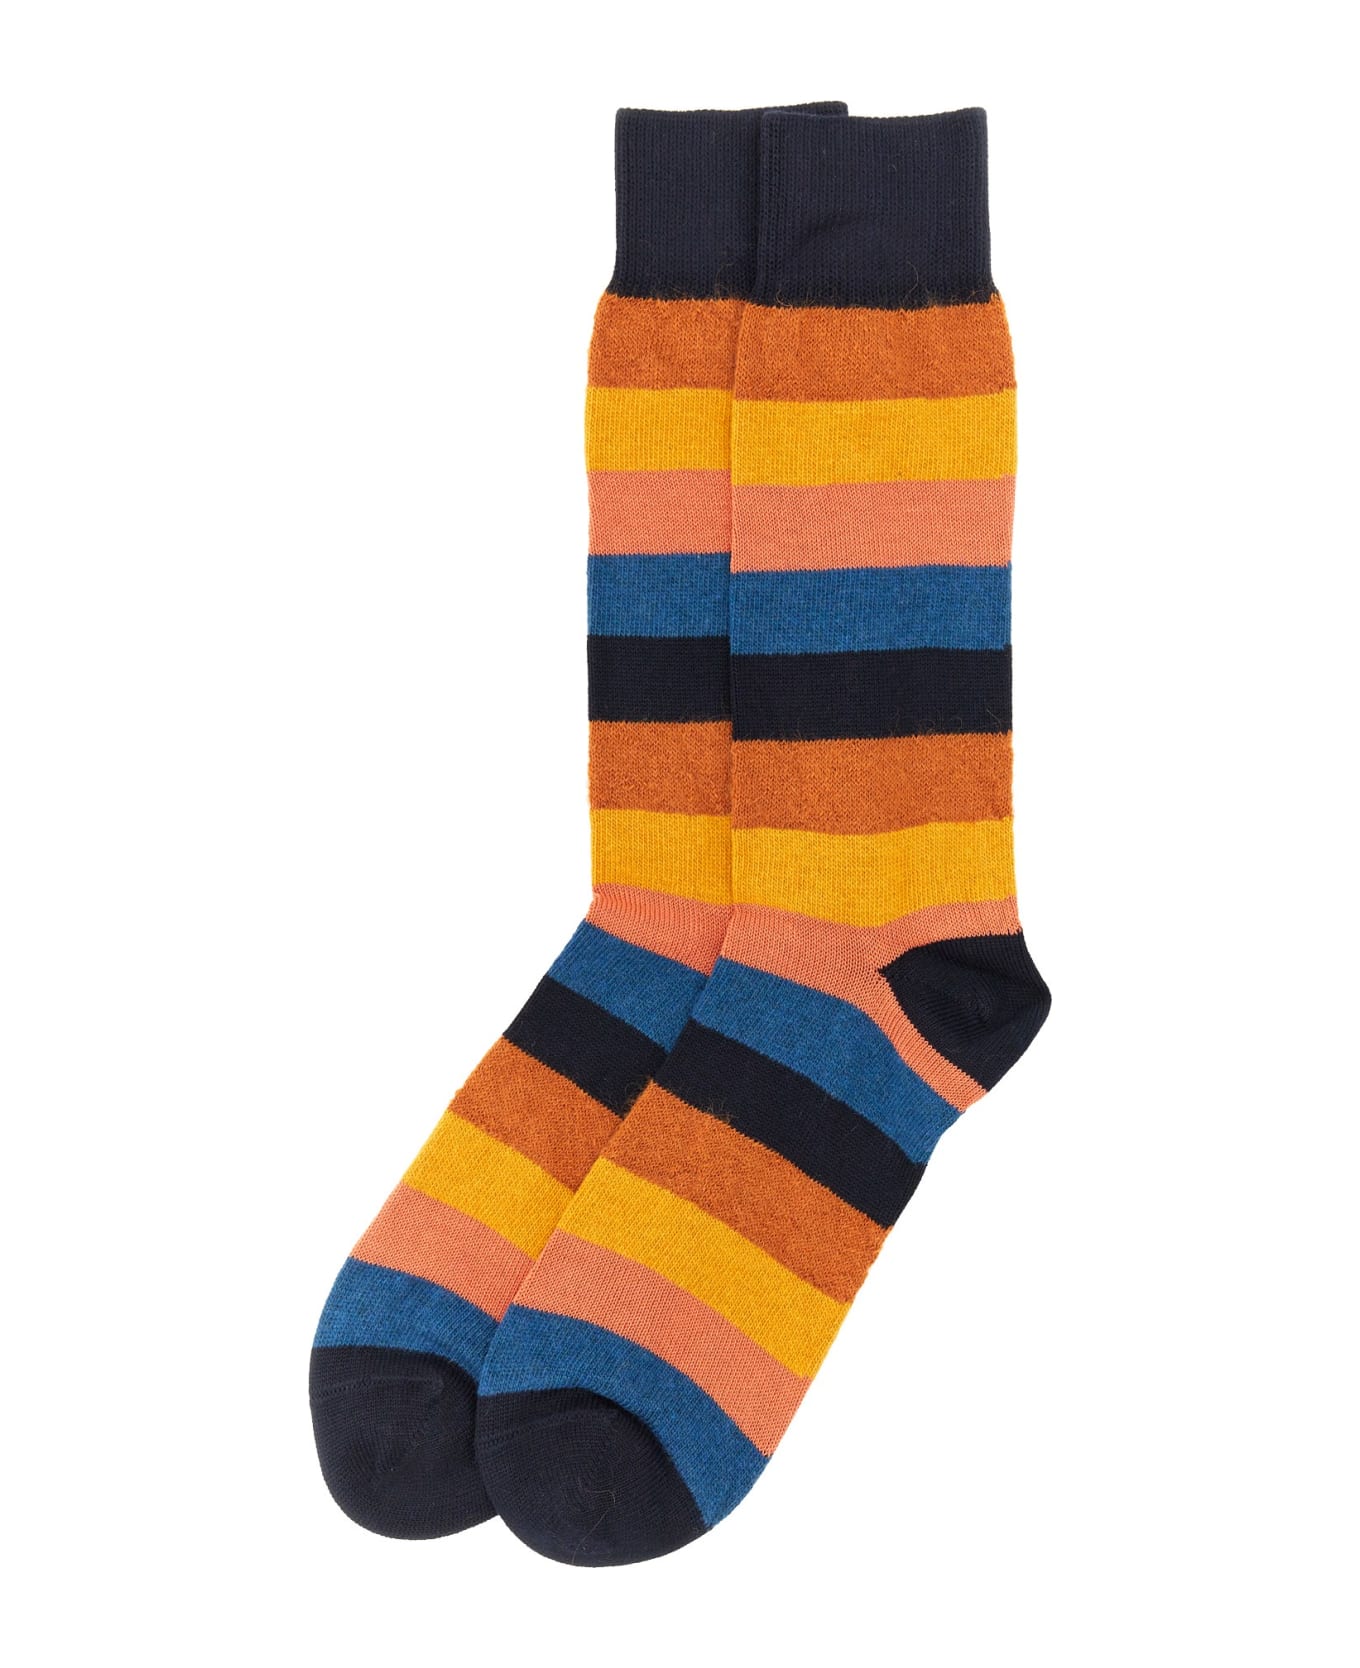 Paul Smith Painted Stripe Socks - MULTICOLOR